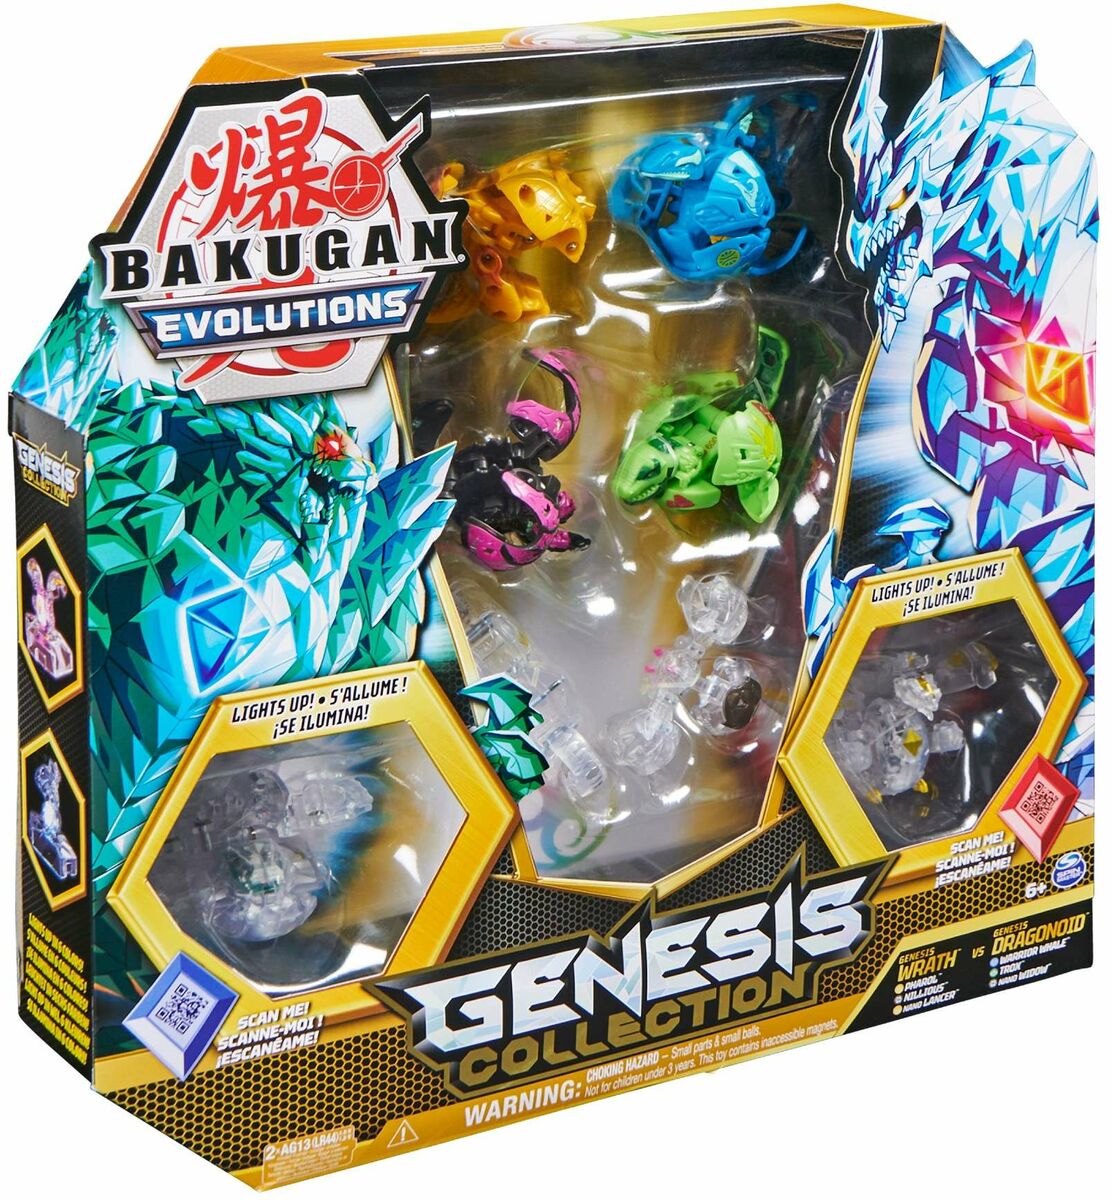 Bakugan Evolutions Genesis Collection Wrath vs Dragonoid